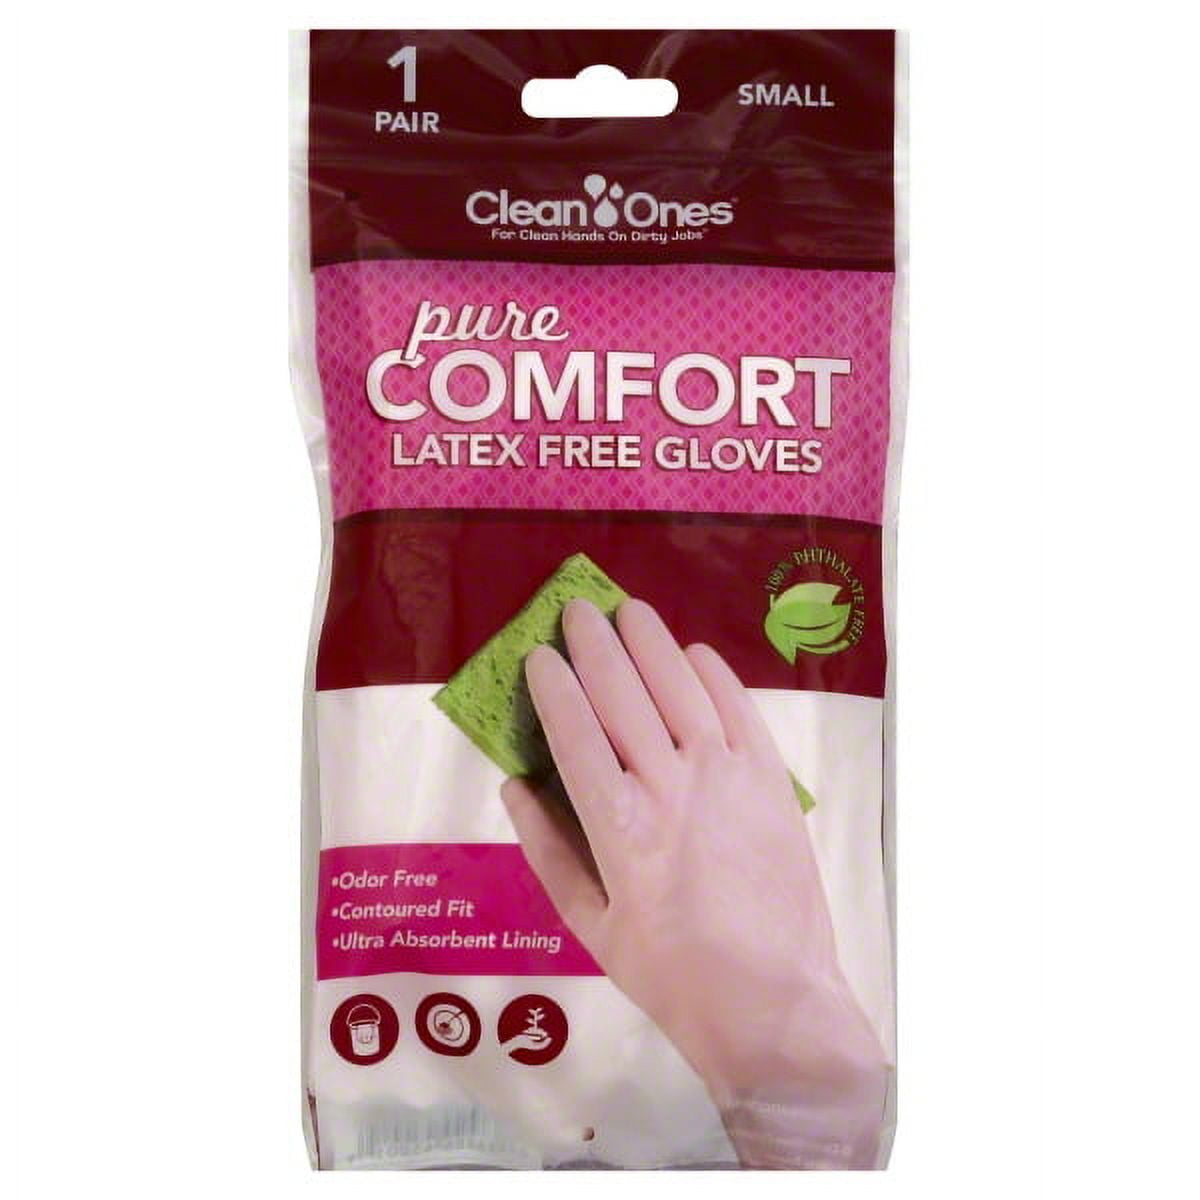 Clean Ones Pure Comfort Latex Free Gloves, Small, 1 pr - Walmart.com